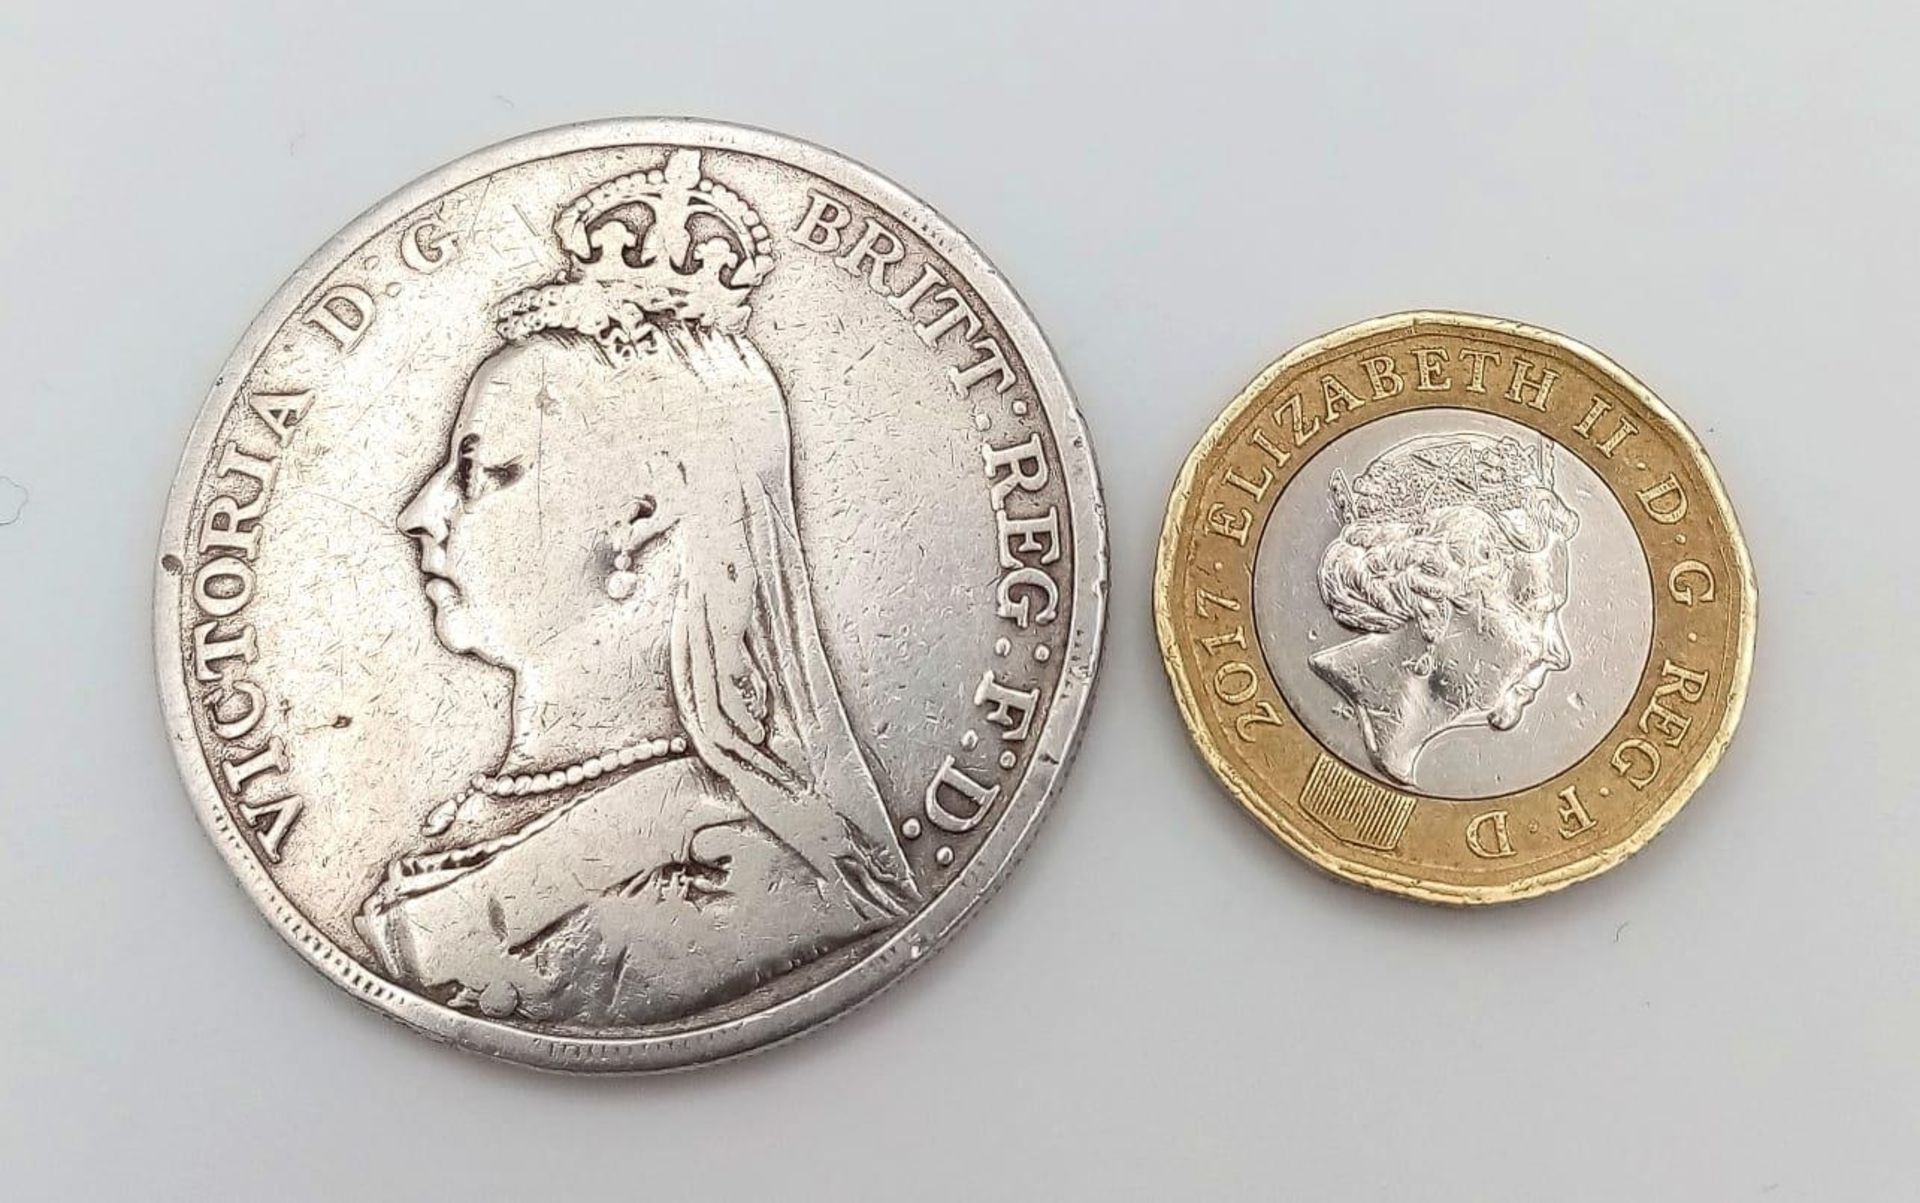 An 1889 Queen Victoria Silver Crown Coin. VF grade but please see photos. - Image 2 of 2